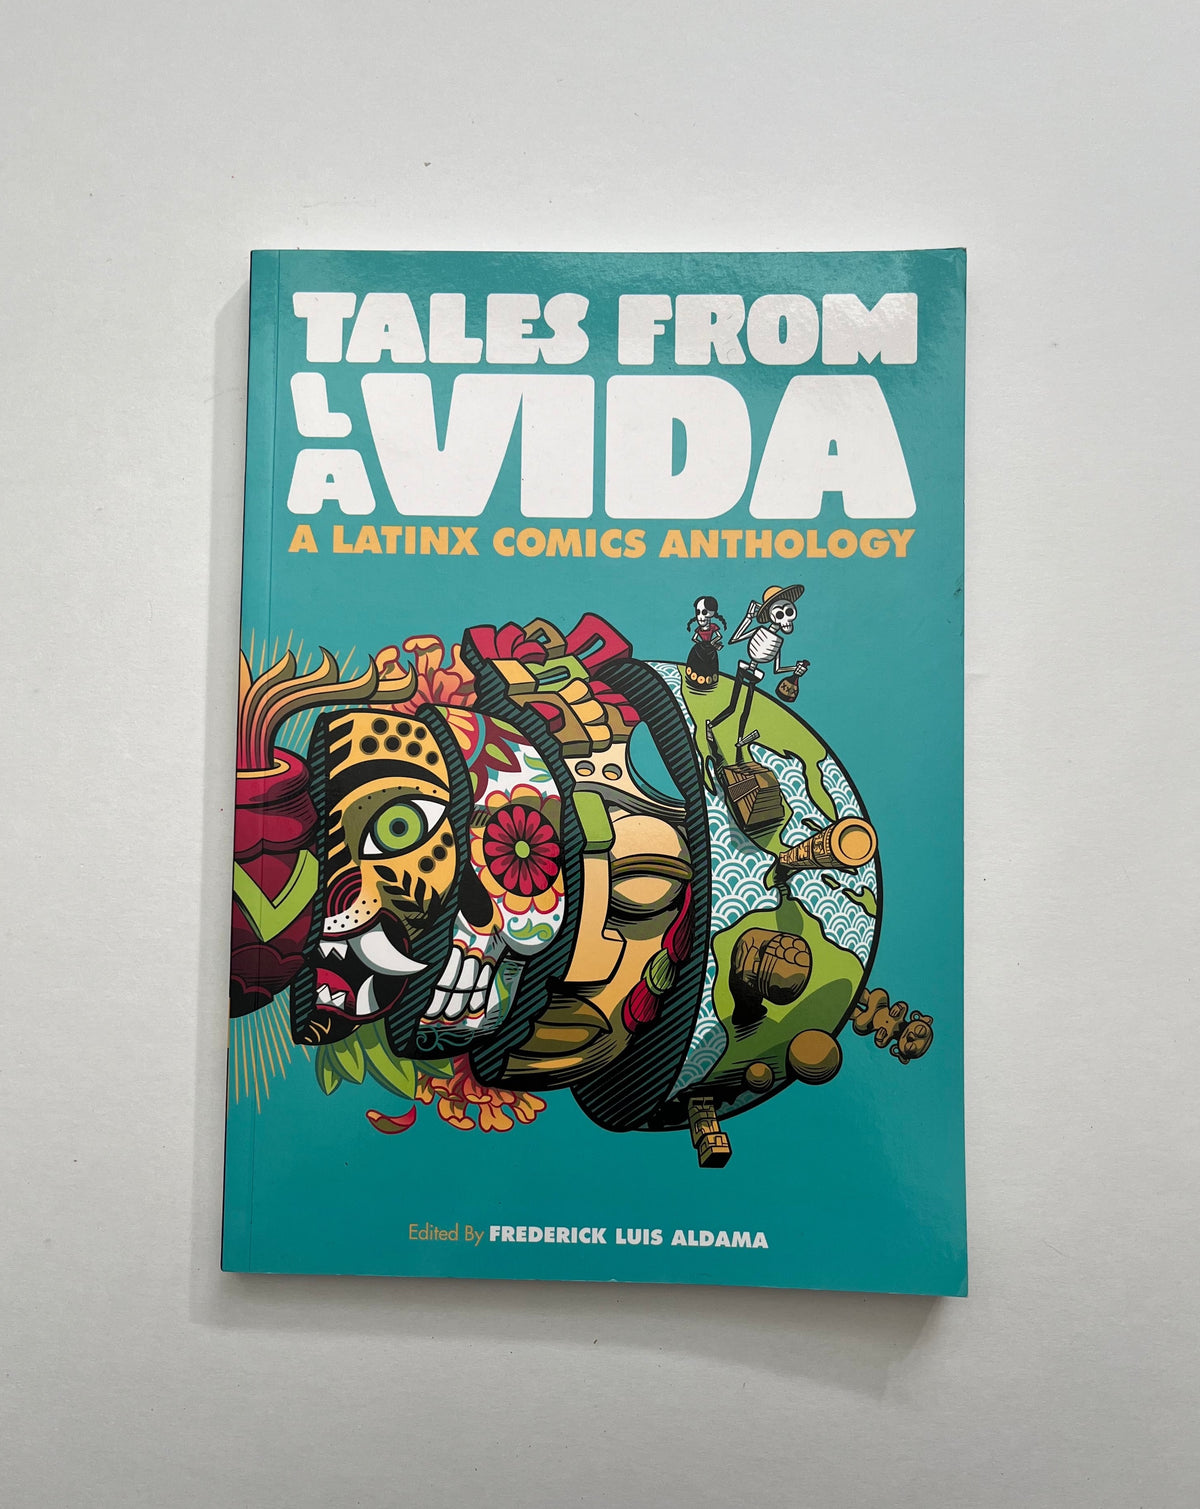 Tales from La Vida: A Latinx Comics Anthology edited by Frederick Luis Aldama